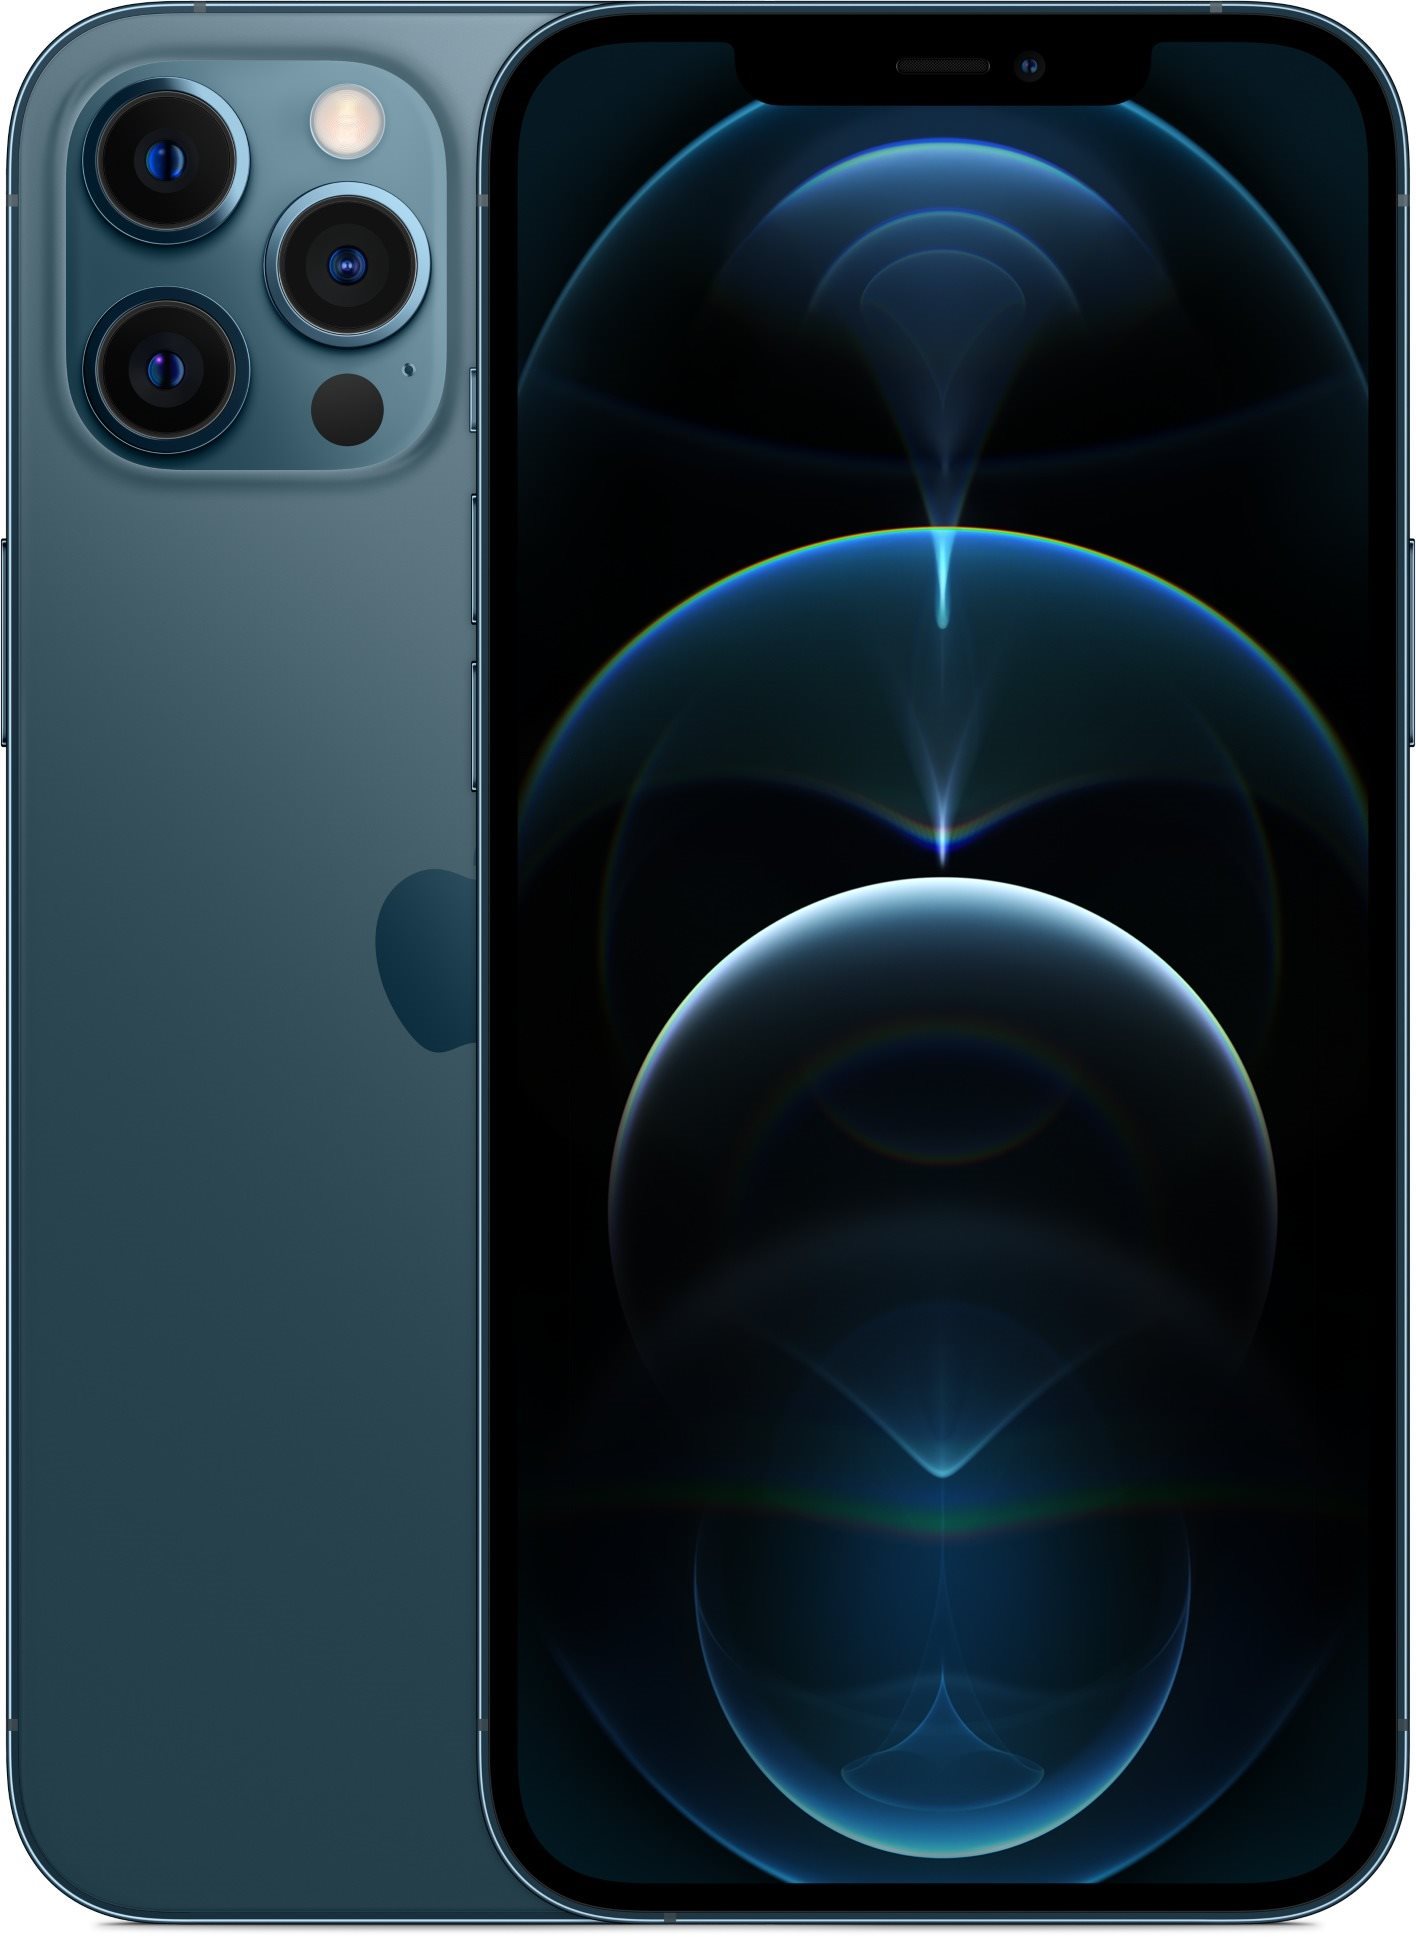 Mobiltelefon iPhone 12 Pro Max 128GB kék